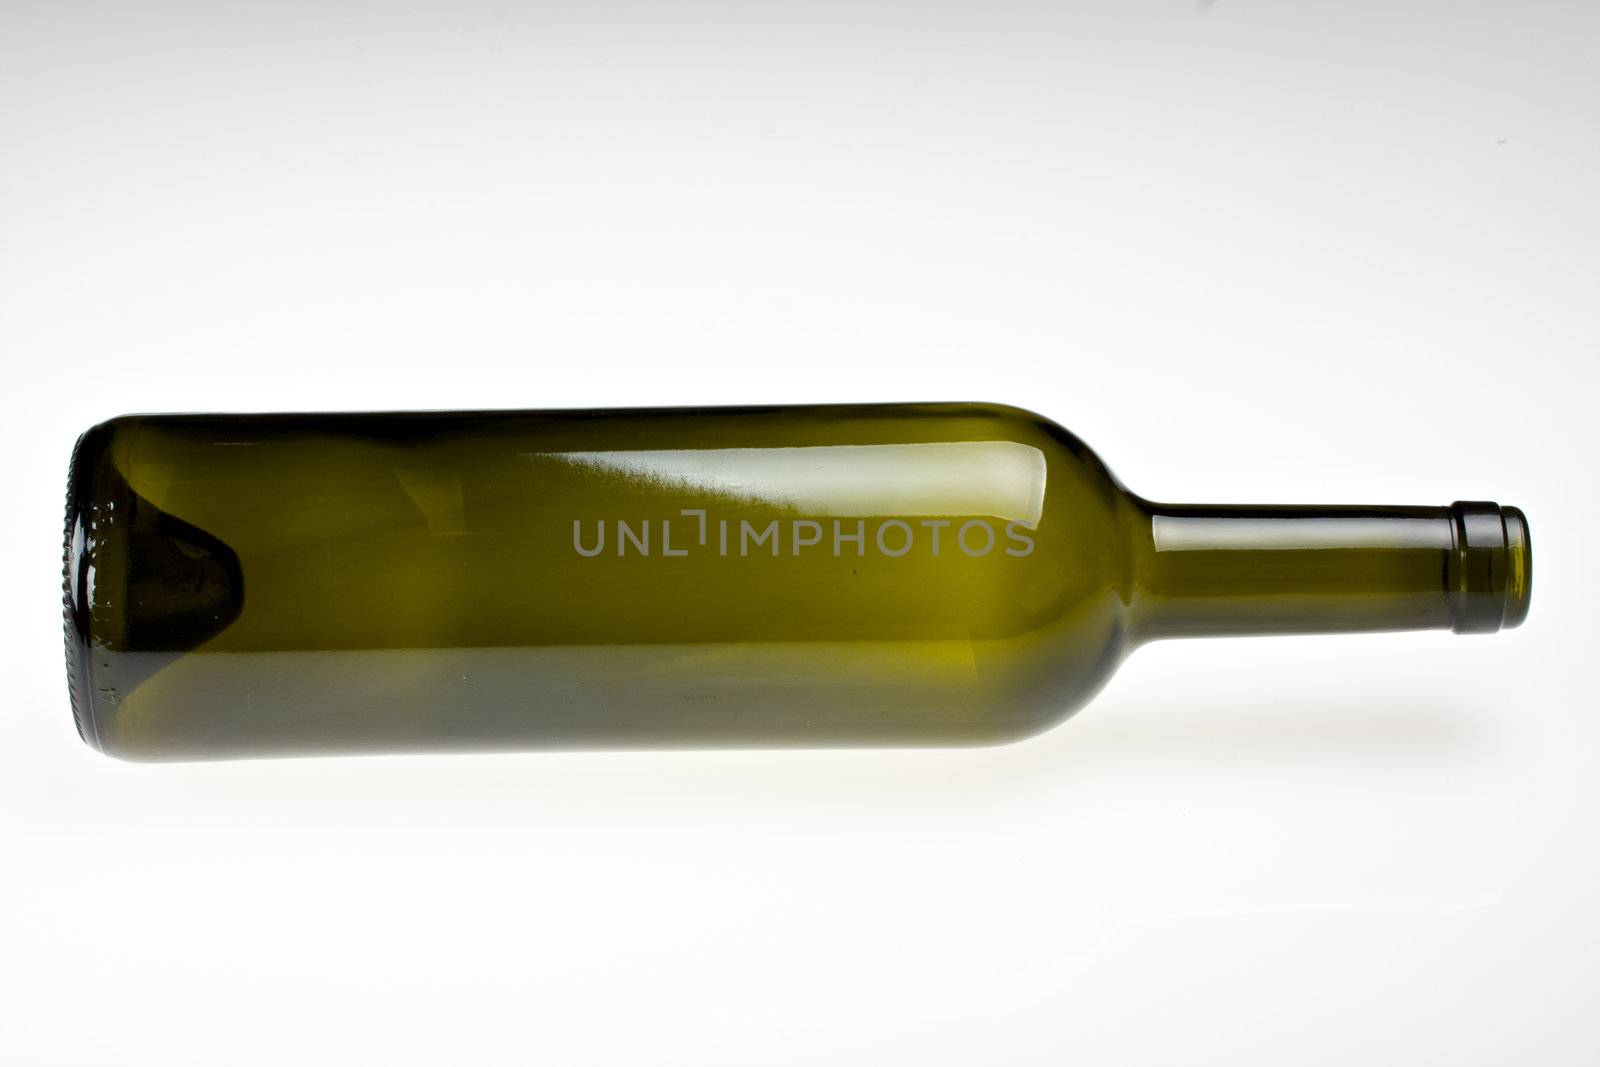 empty wine bottle lying on grey background